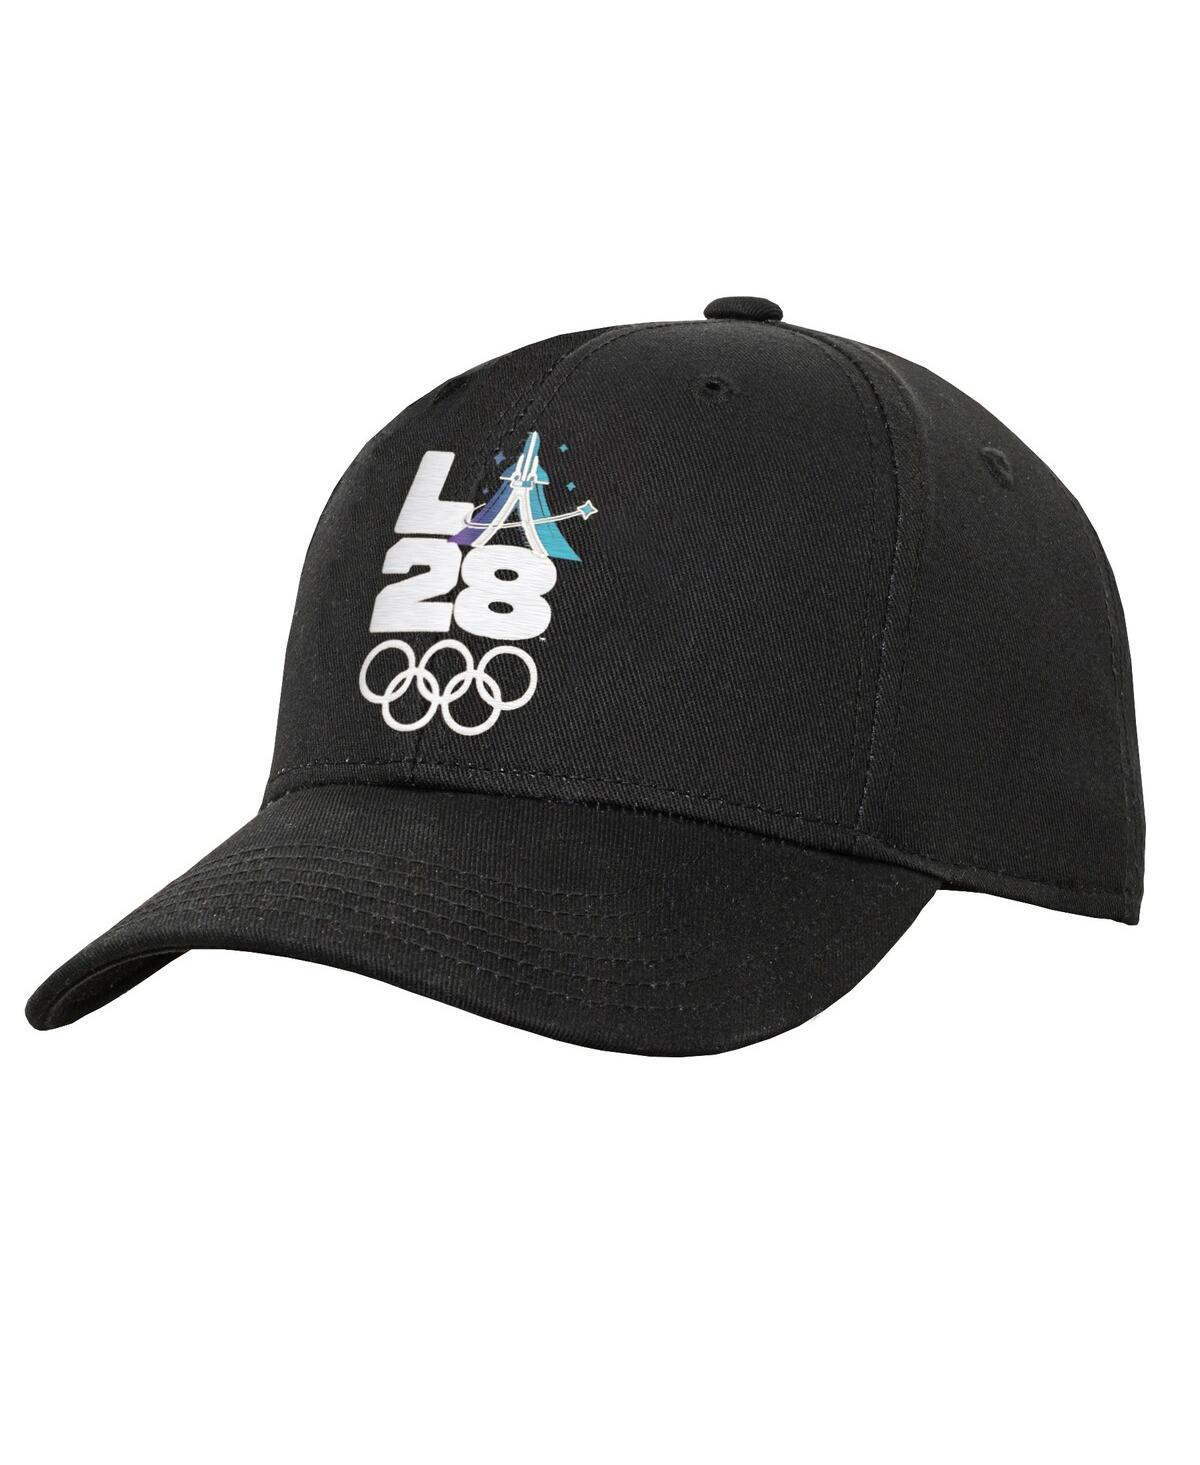 Outerstuff Men's Black La28 Summer Olympics Space Travel Adjustable Hat